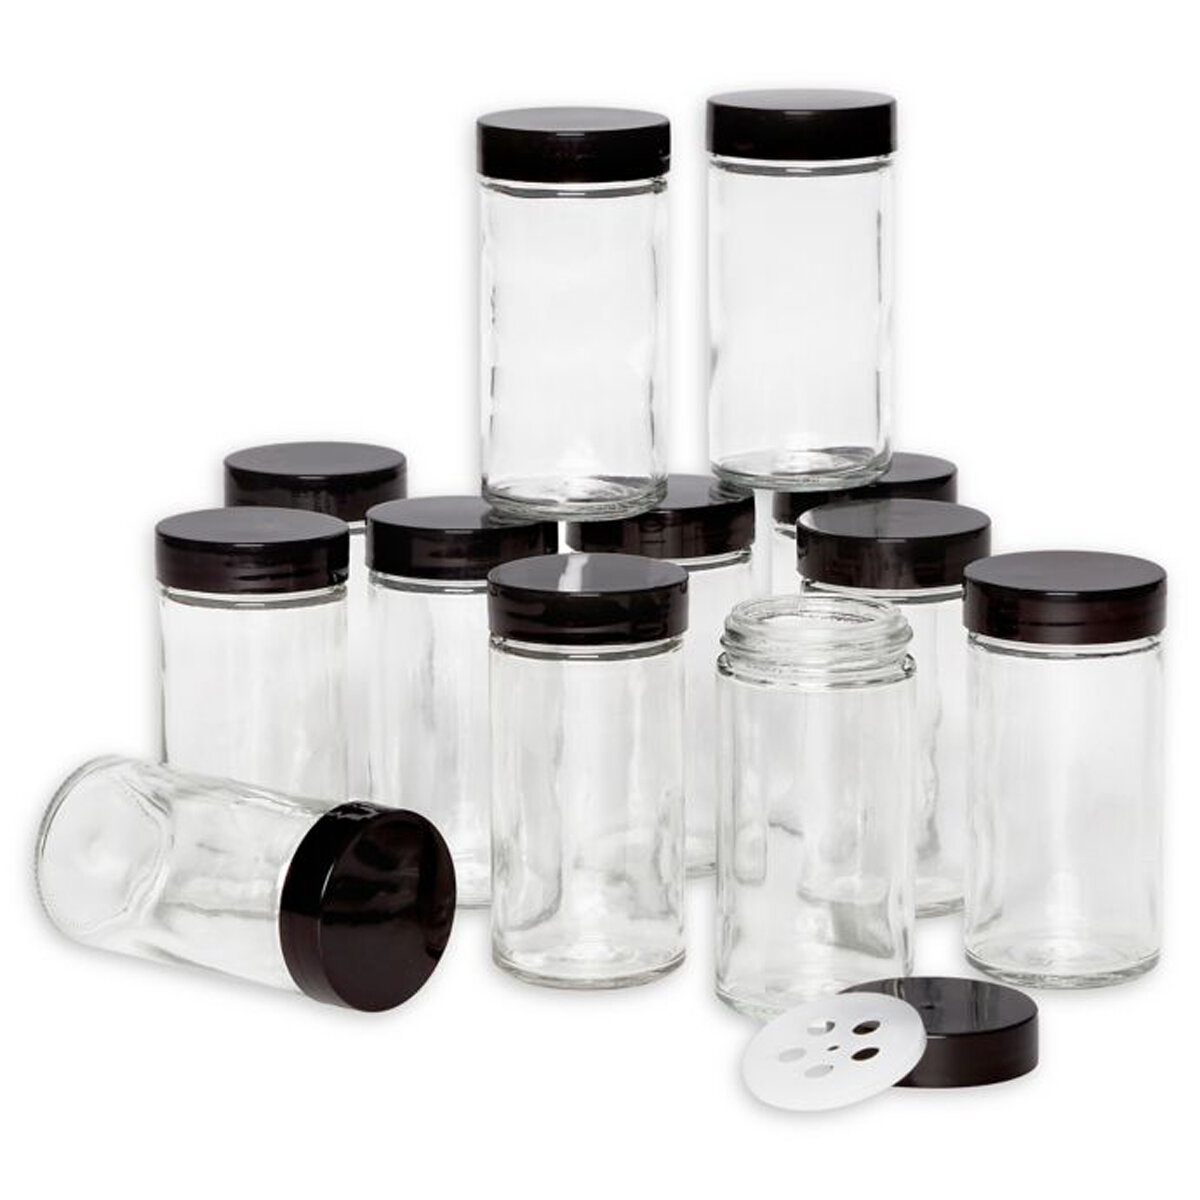 spice rack with empty jars